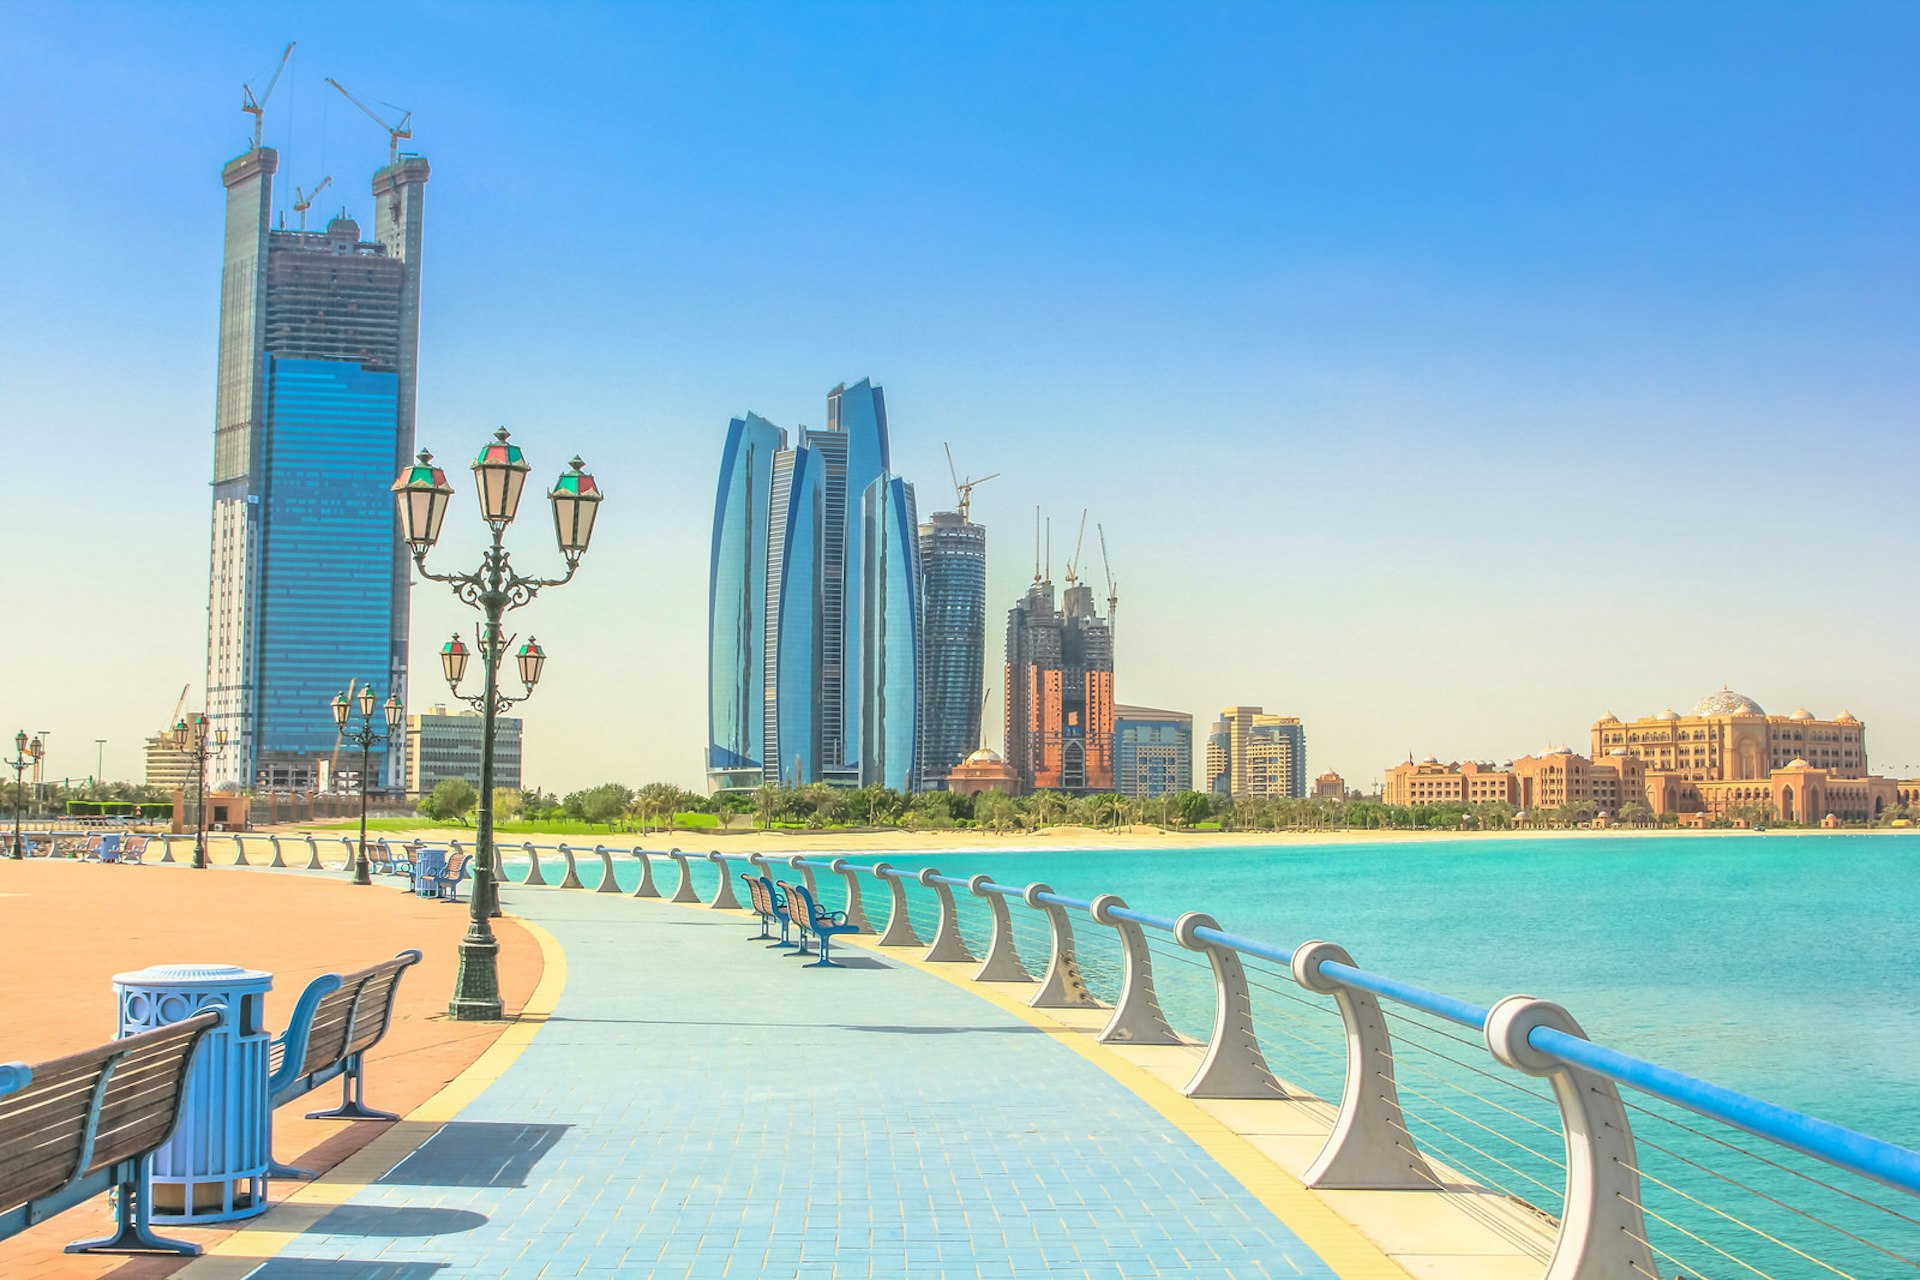 Abu Dhabi Corniche. Image by Benny Marty / Shutterstock